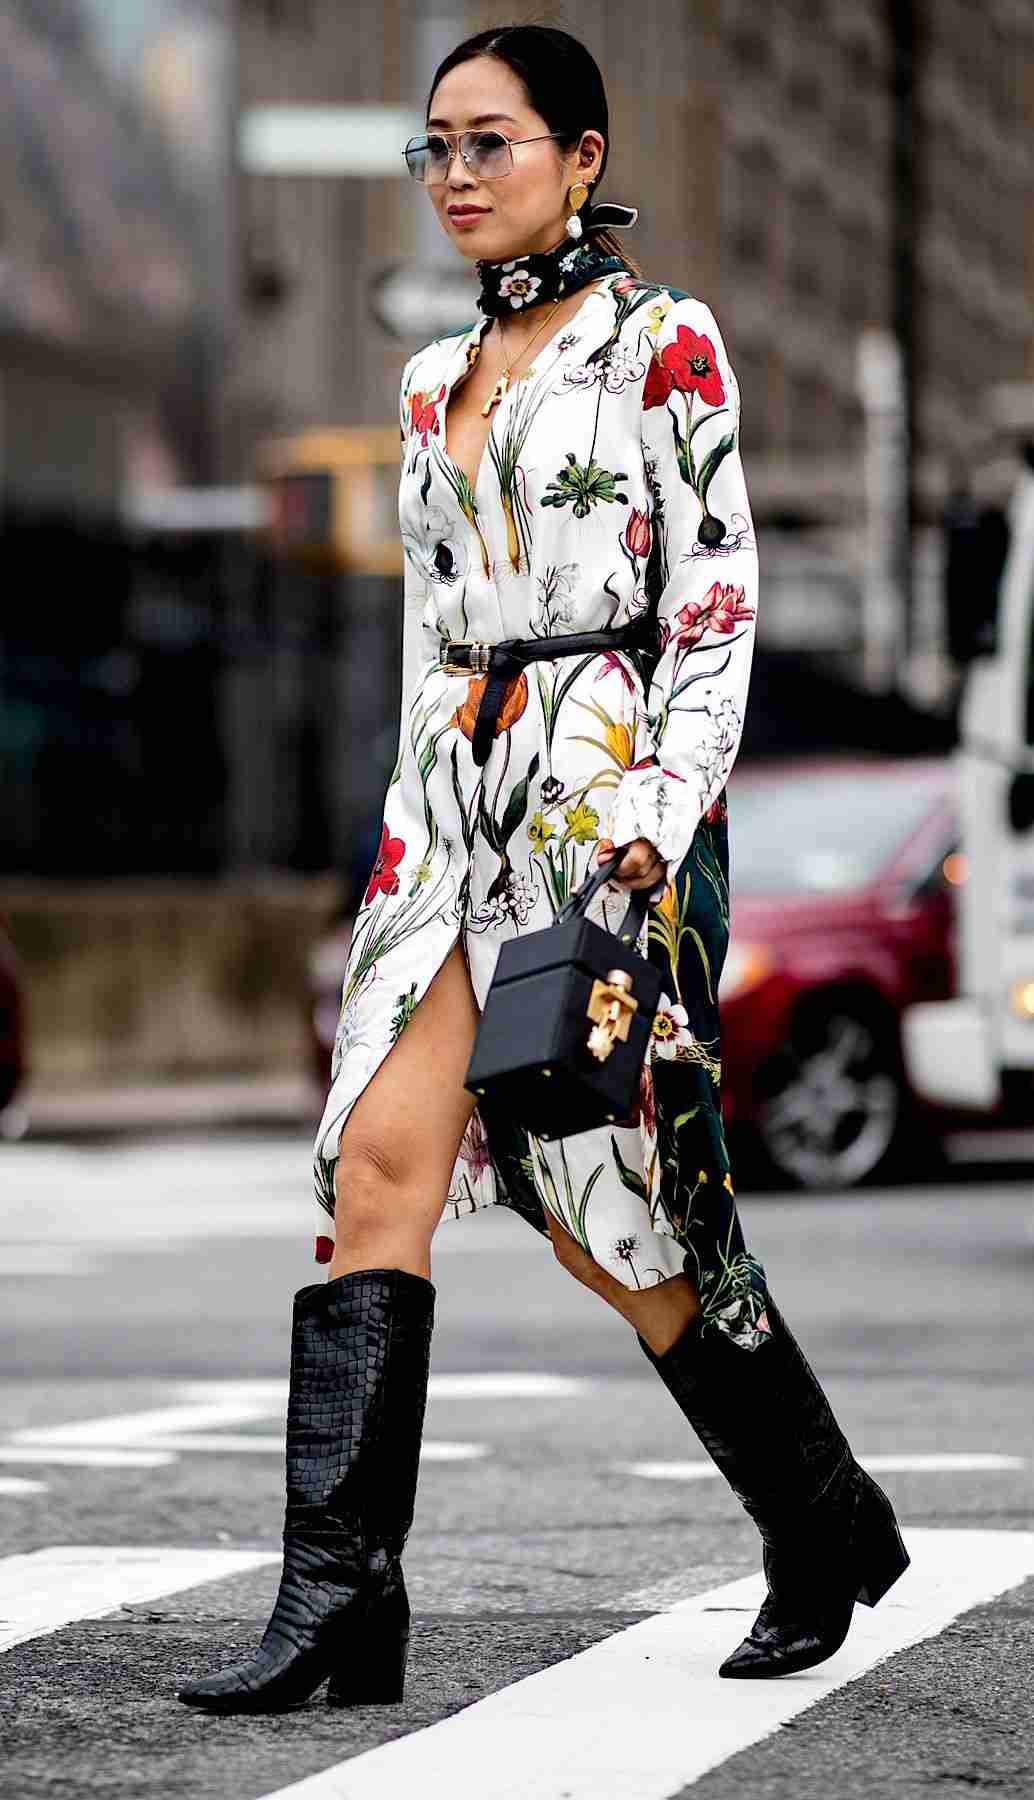 Kleid mit Blumenmuster kombinieren Wickelkleid Lederstiefel kleine Handtasche Modetrends Damen